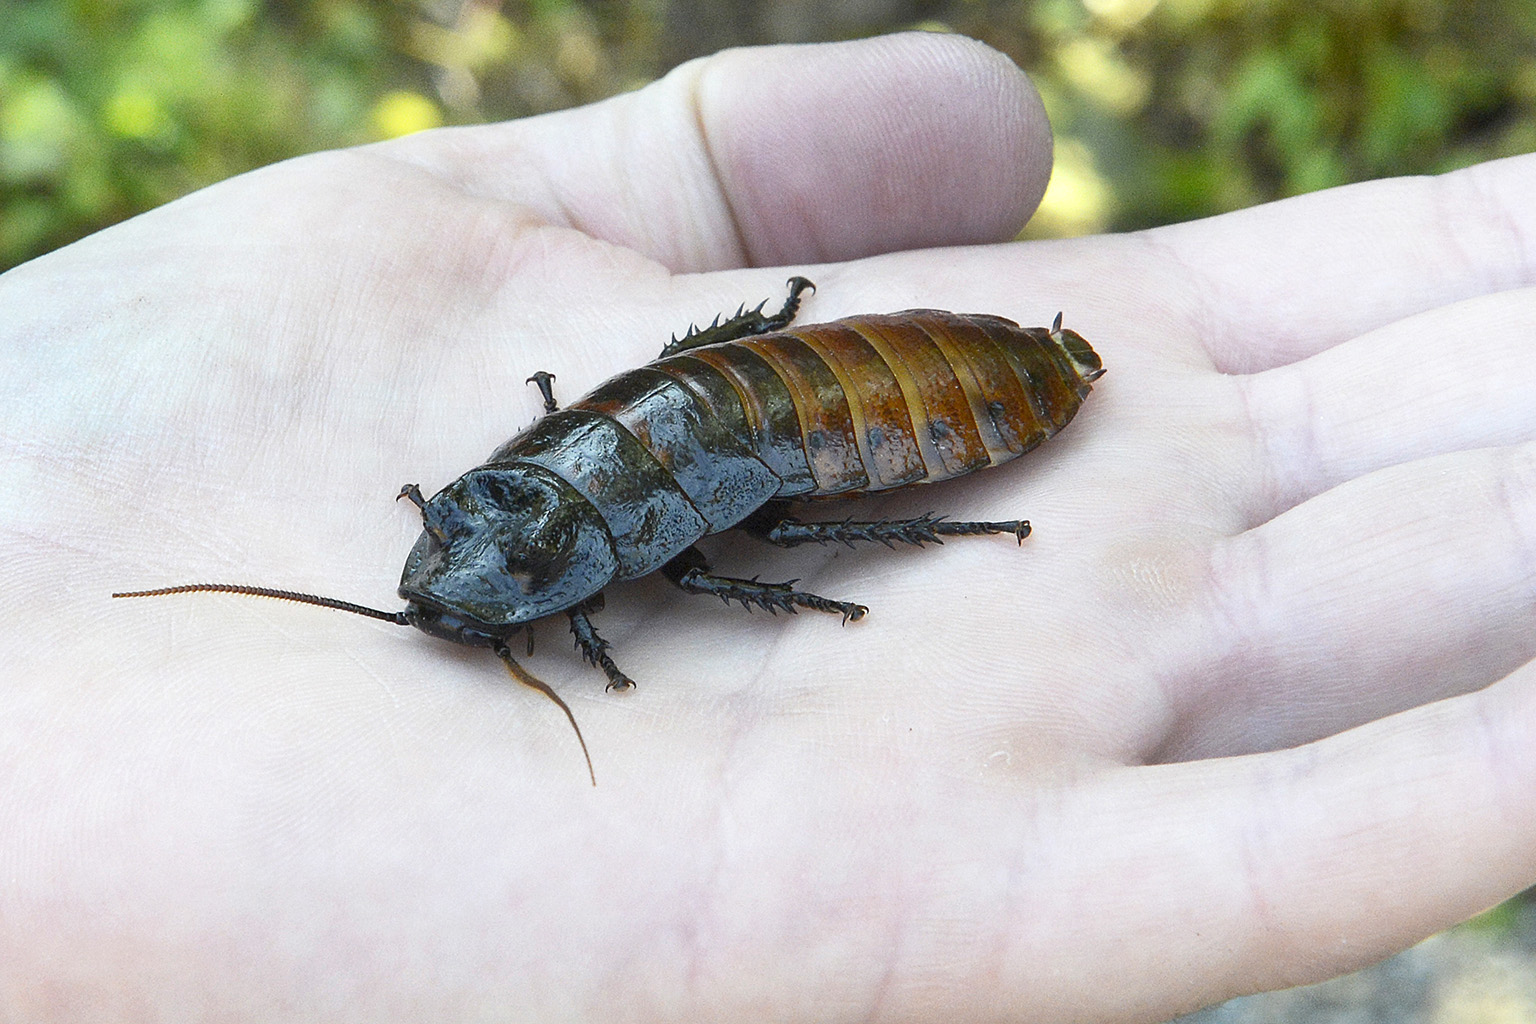 Madagascar Hissing Cockroach | The Maryland Zoo